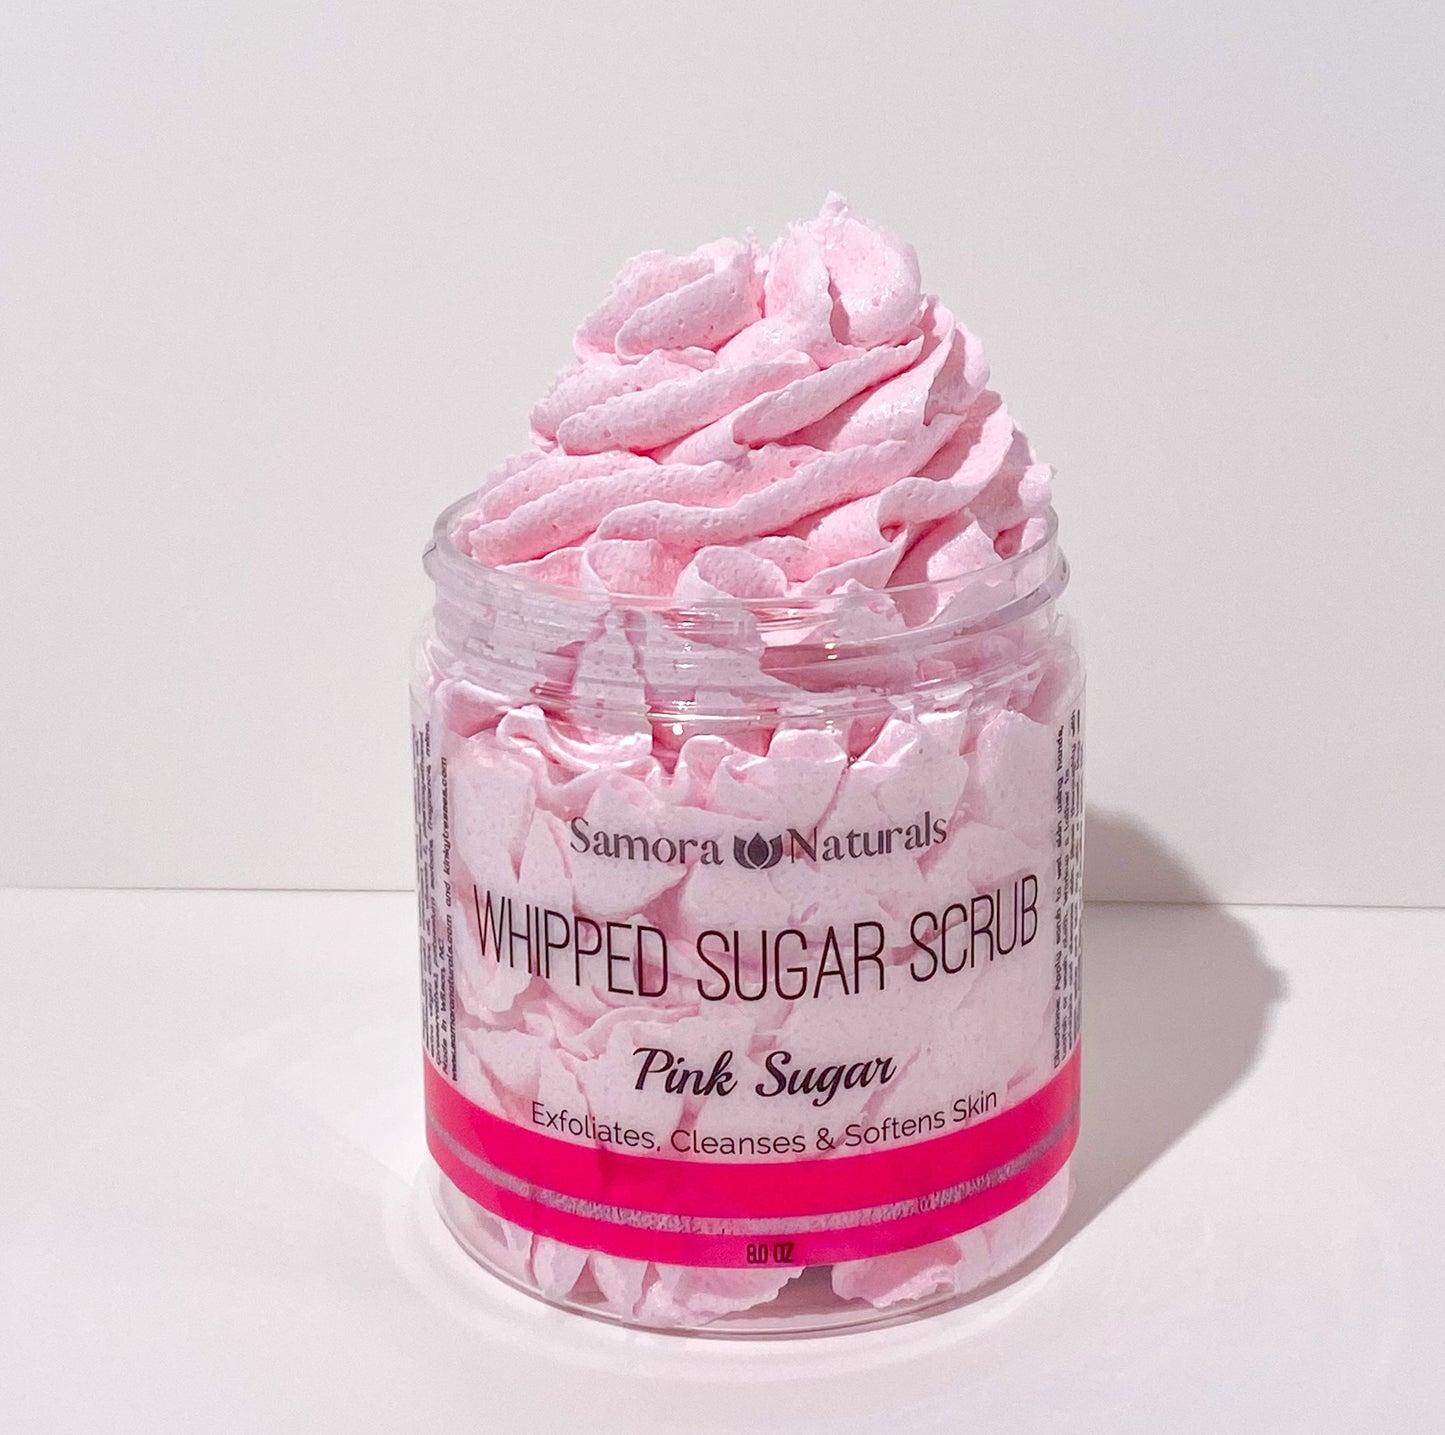 Pink Sugar Whipped Sugar Scrub